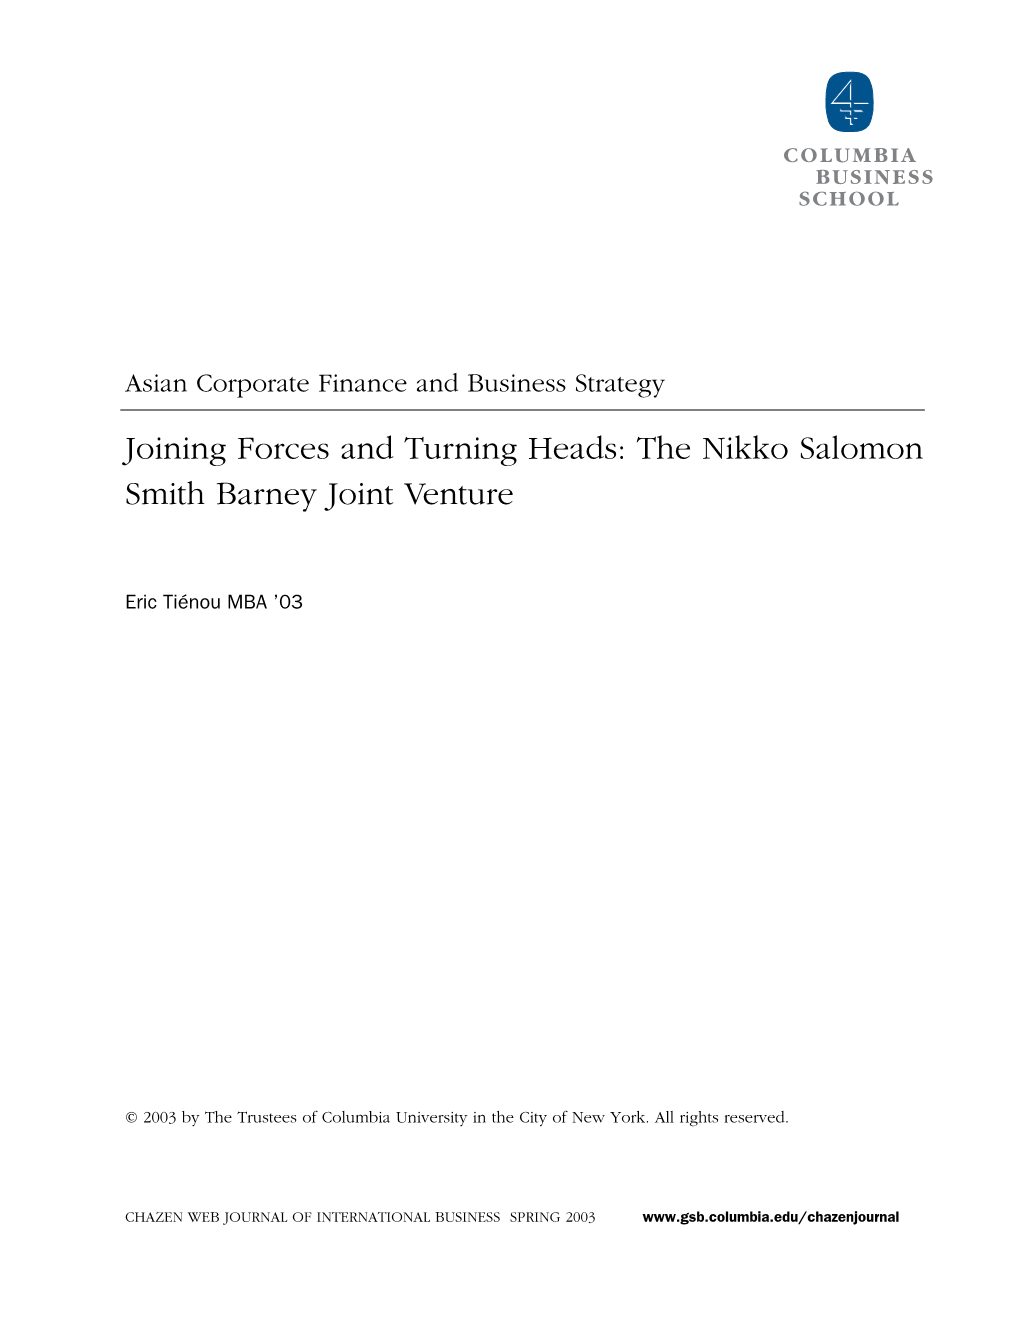 The Nikko Salomon Smith Barney Joint Venture